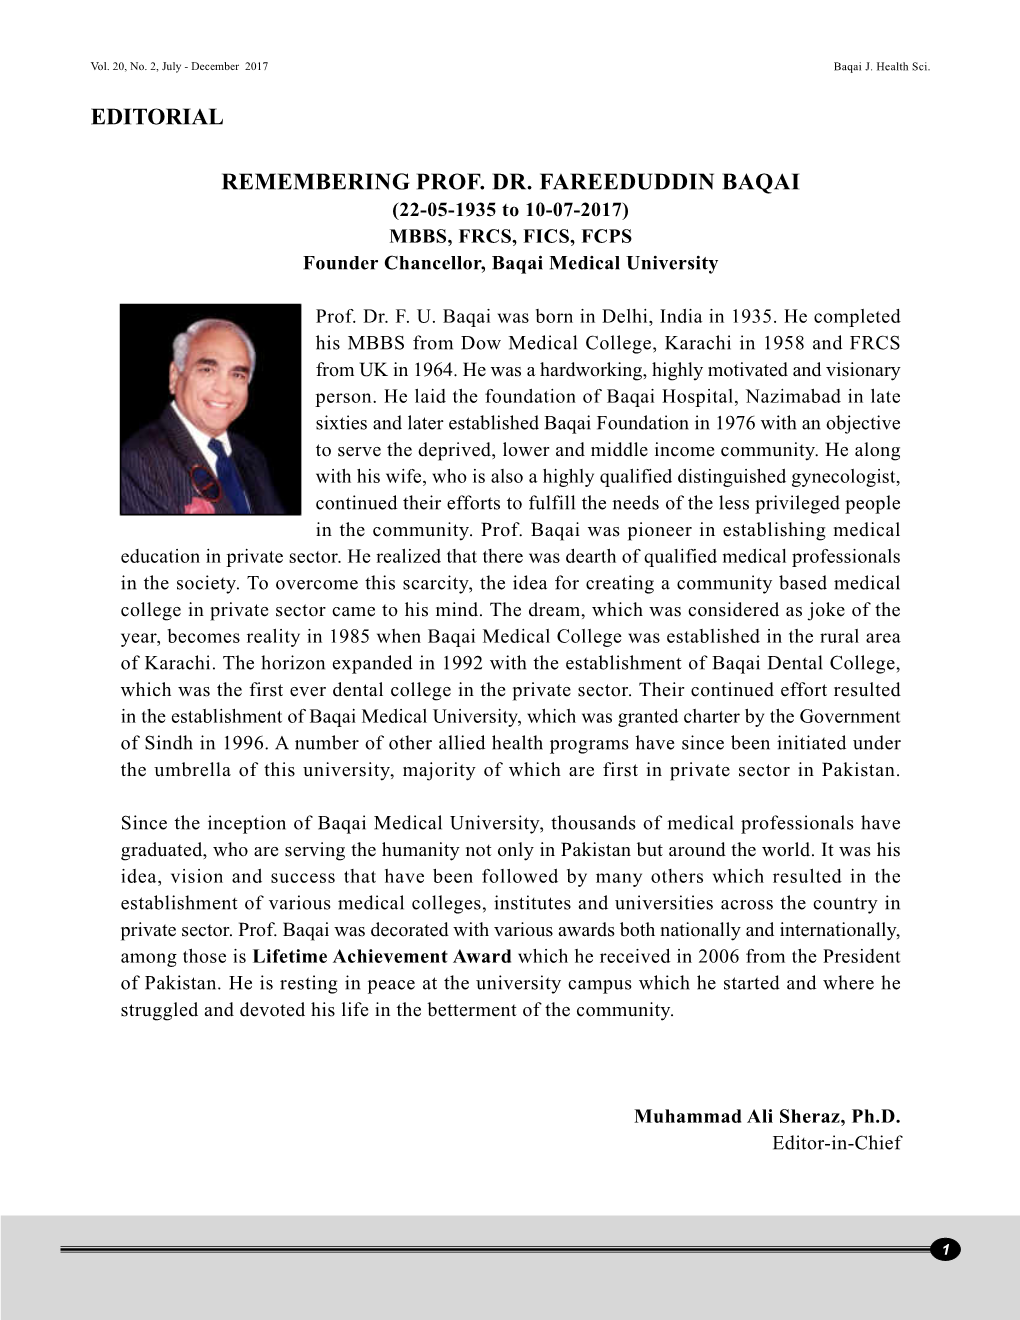 Editorial Remembering Prof. Dr. Fareeduddin Baqai